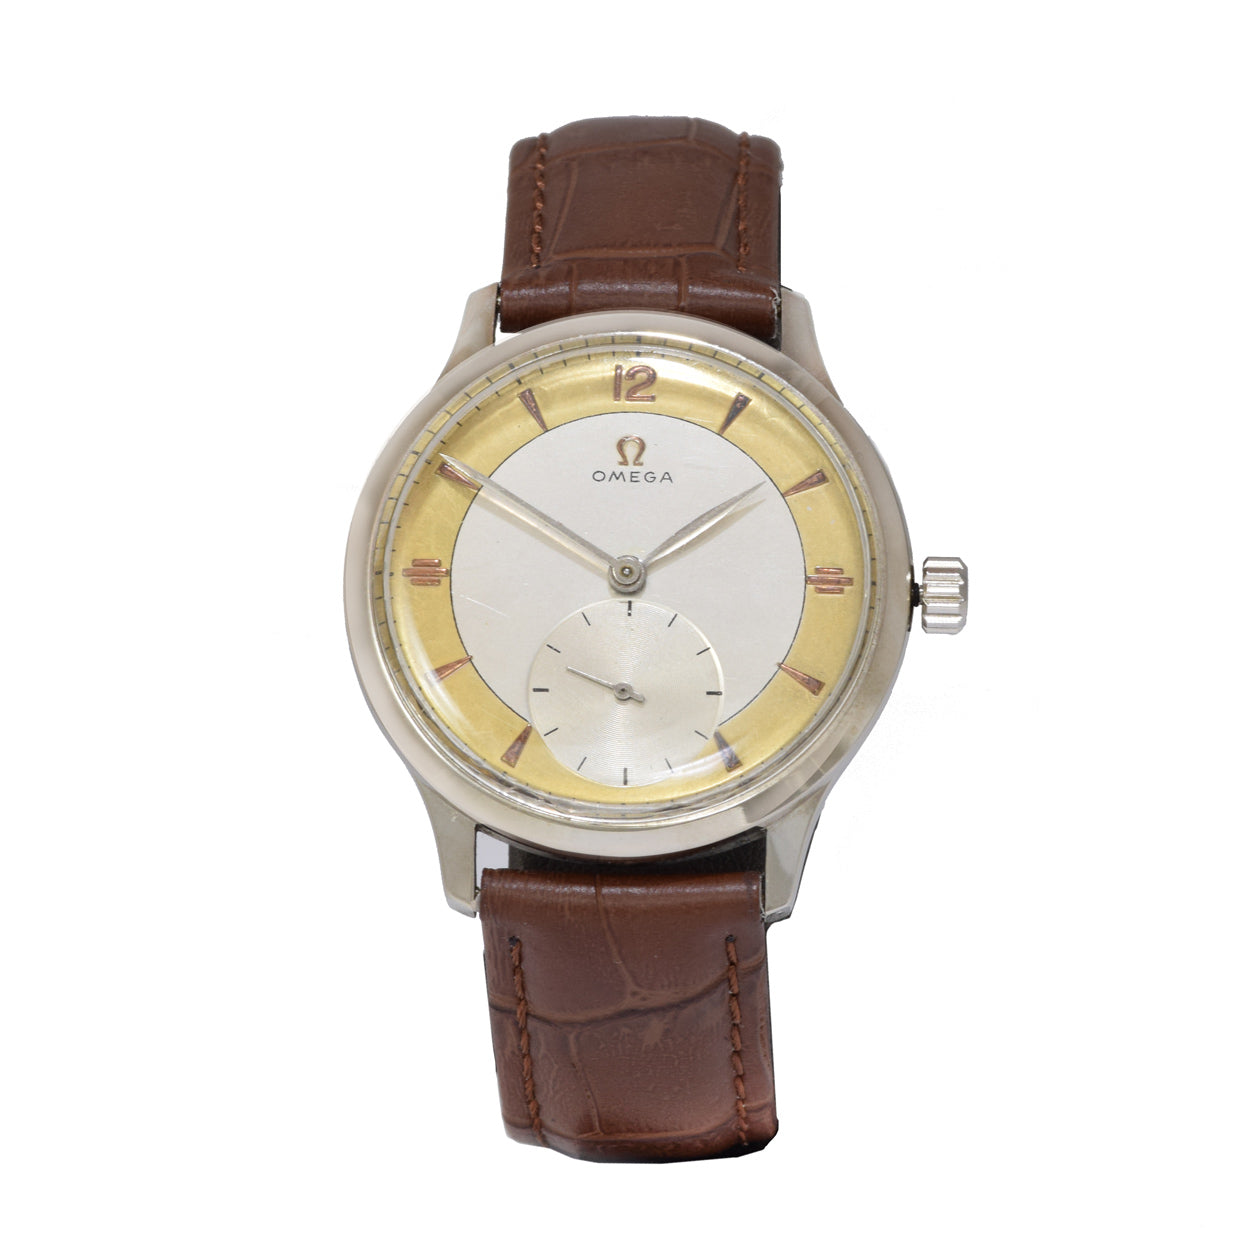 Vintage Omega circa 1950's watch